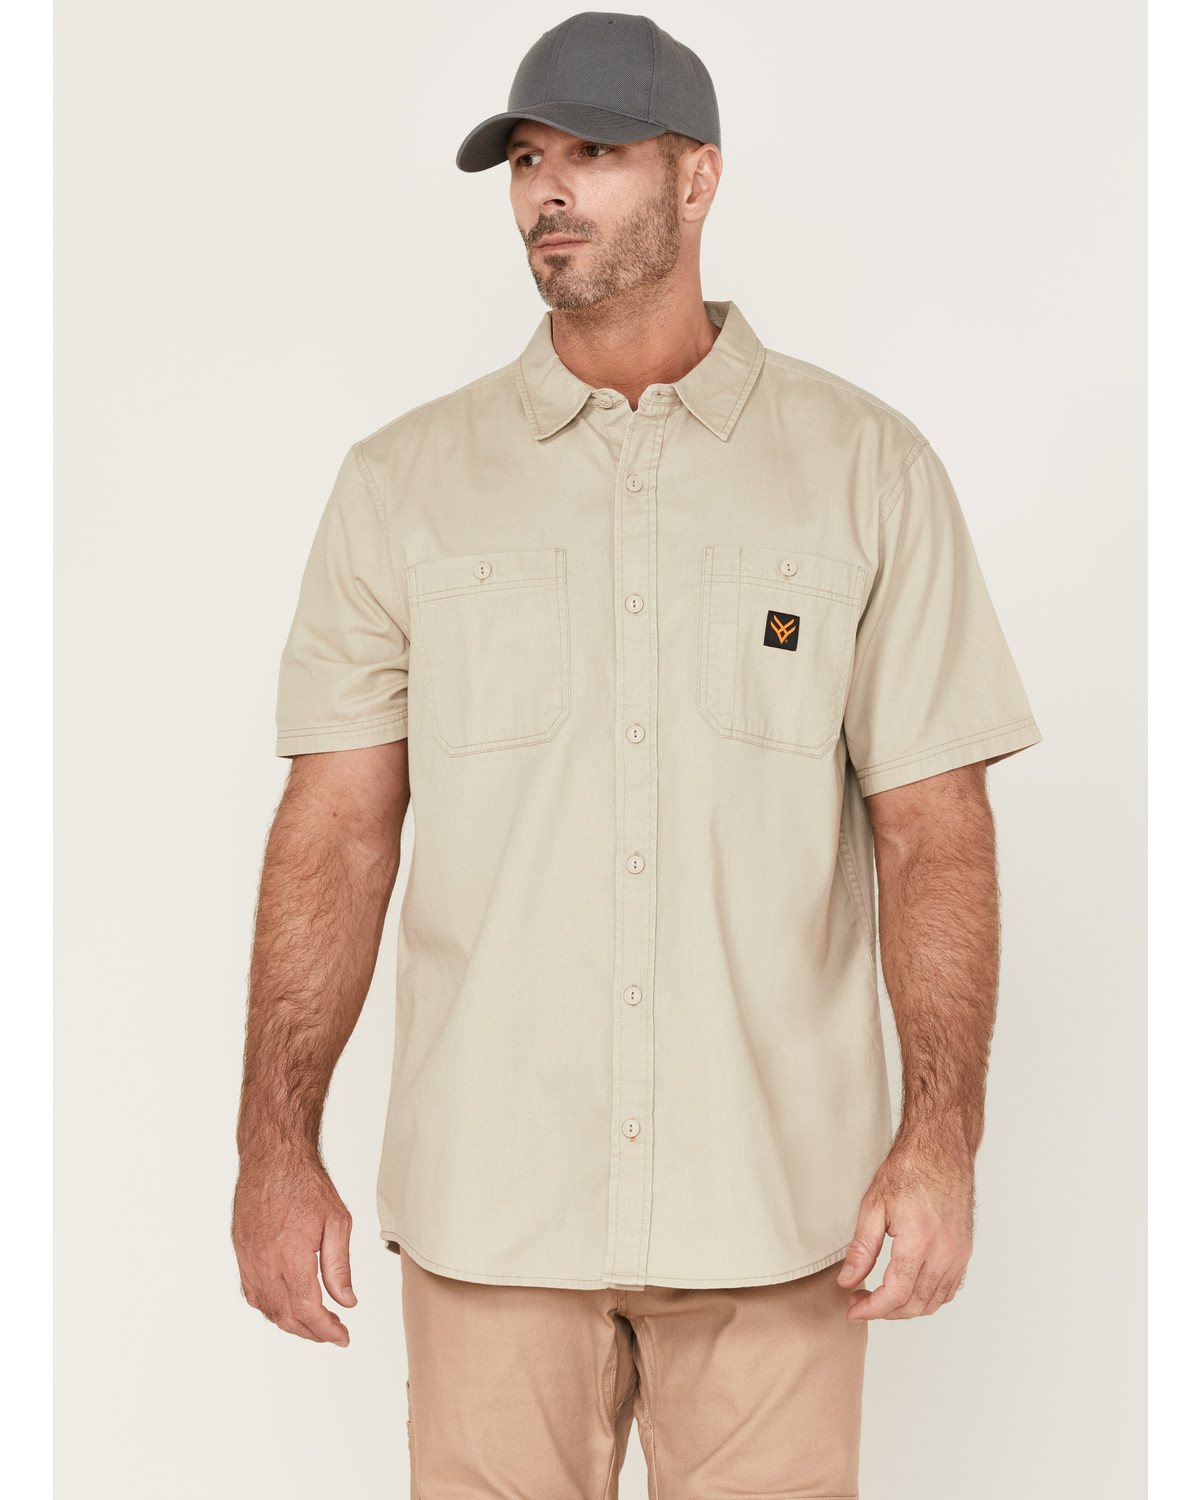 Hawx Men's Twill Short Sleeve Button-Down Work Shirt